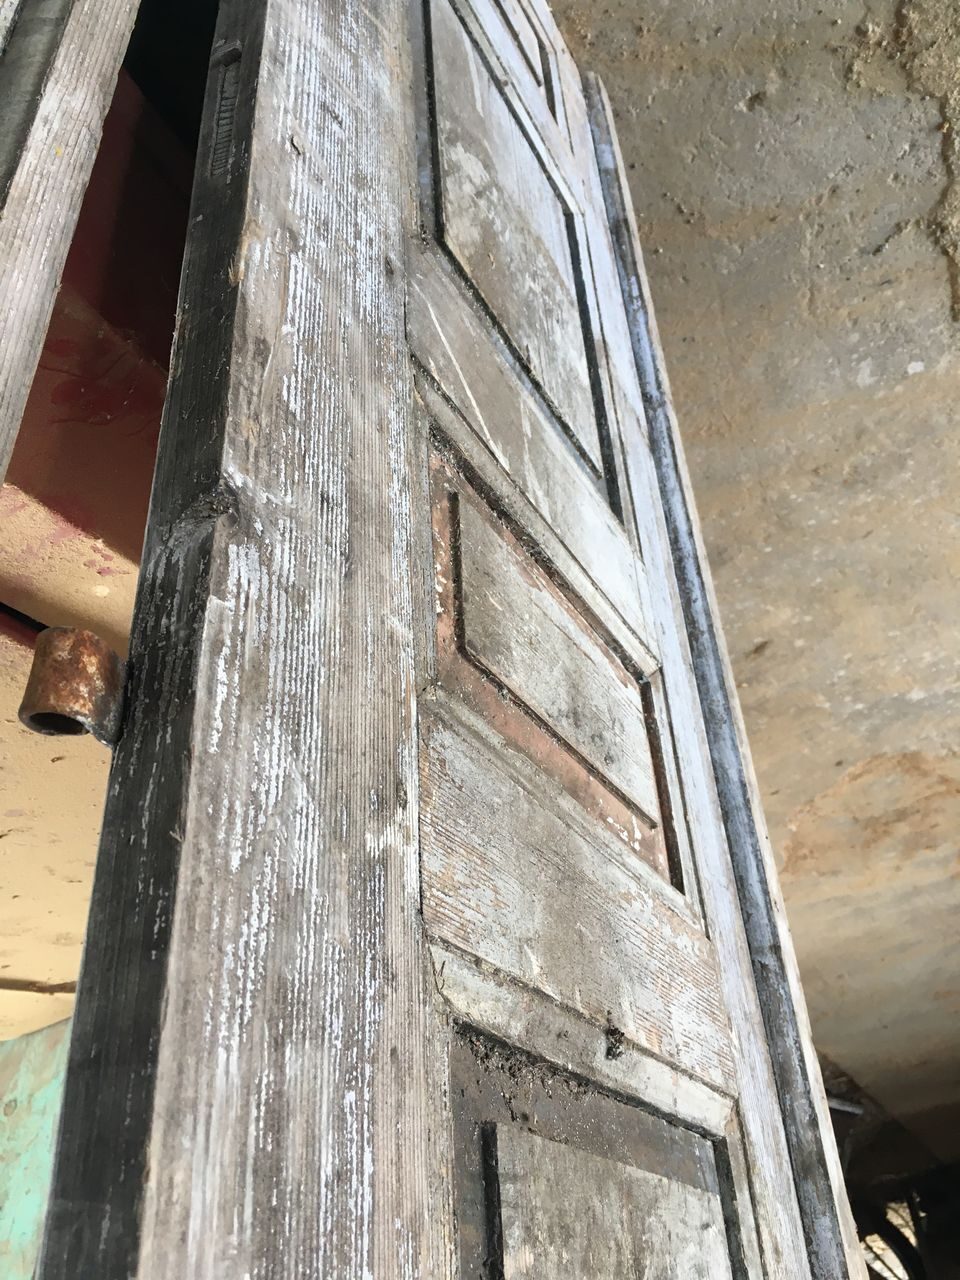 greek old doors